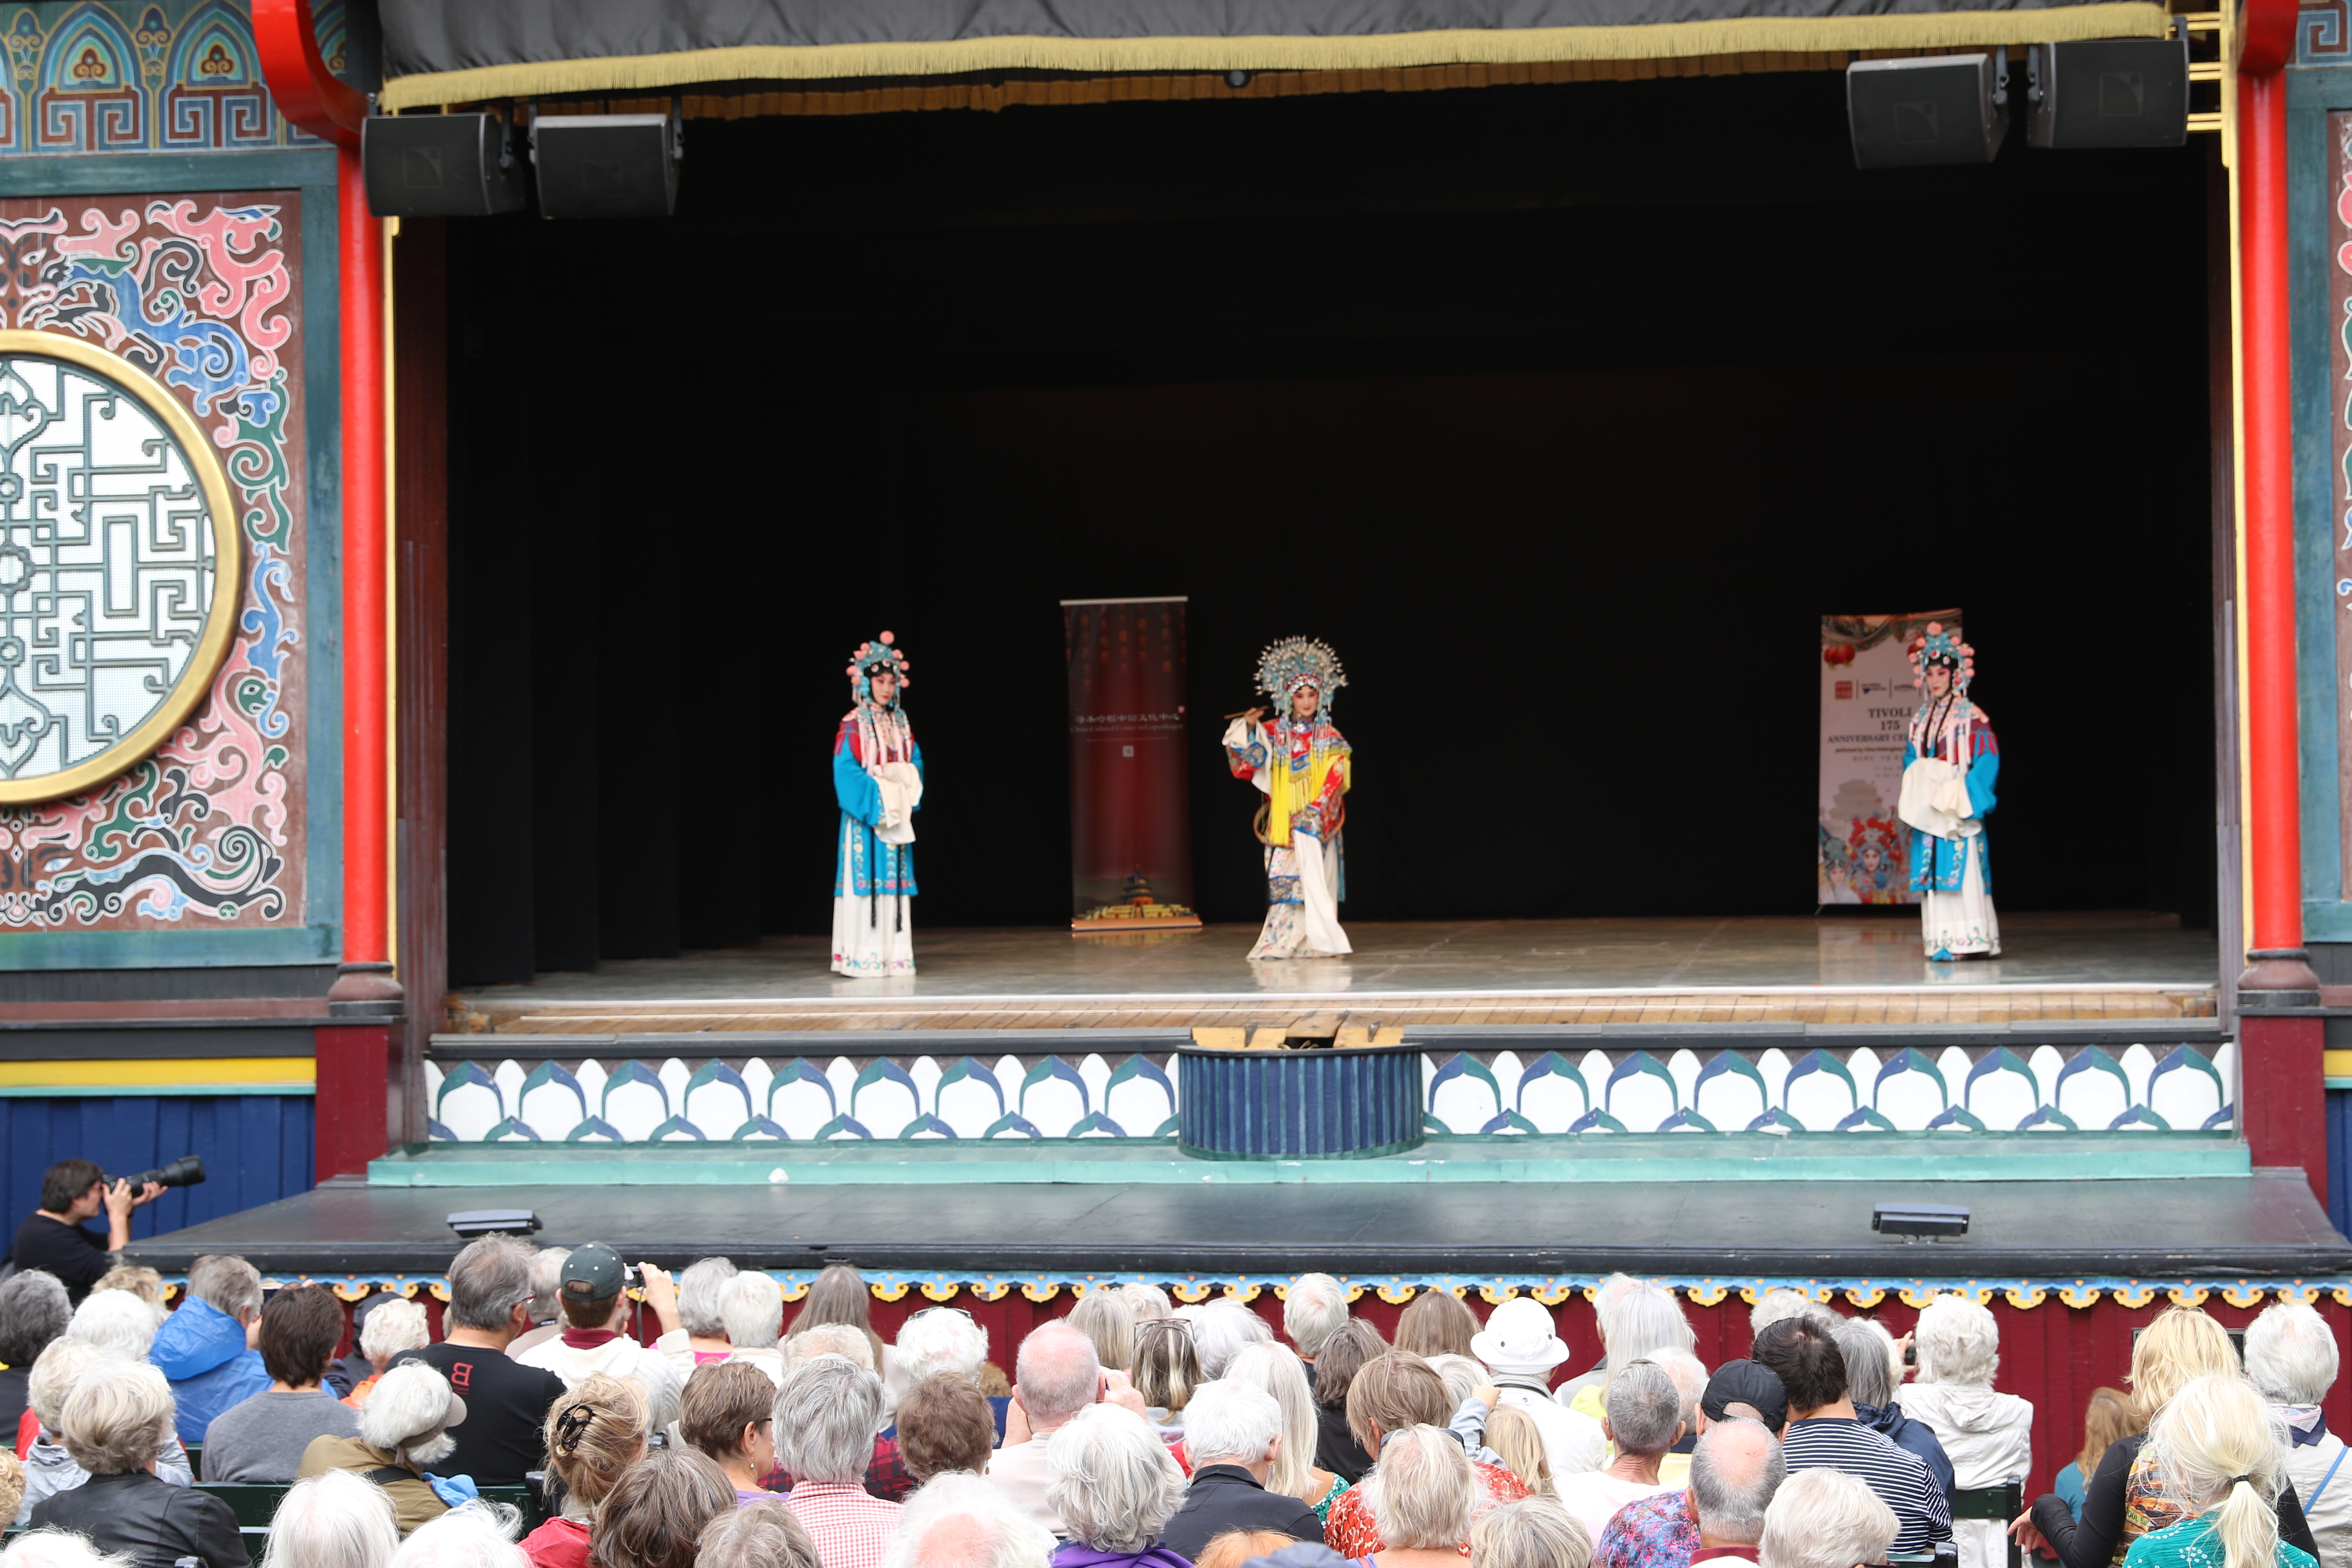 Peking Opera was staged in Tivoli 175 anniversary ceremony